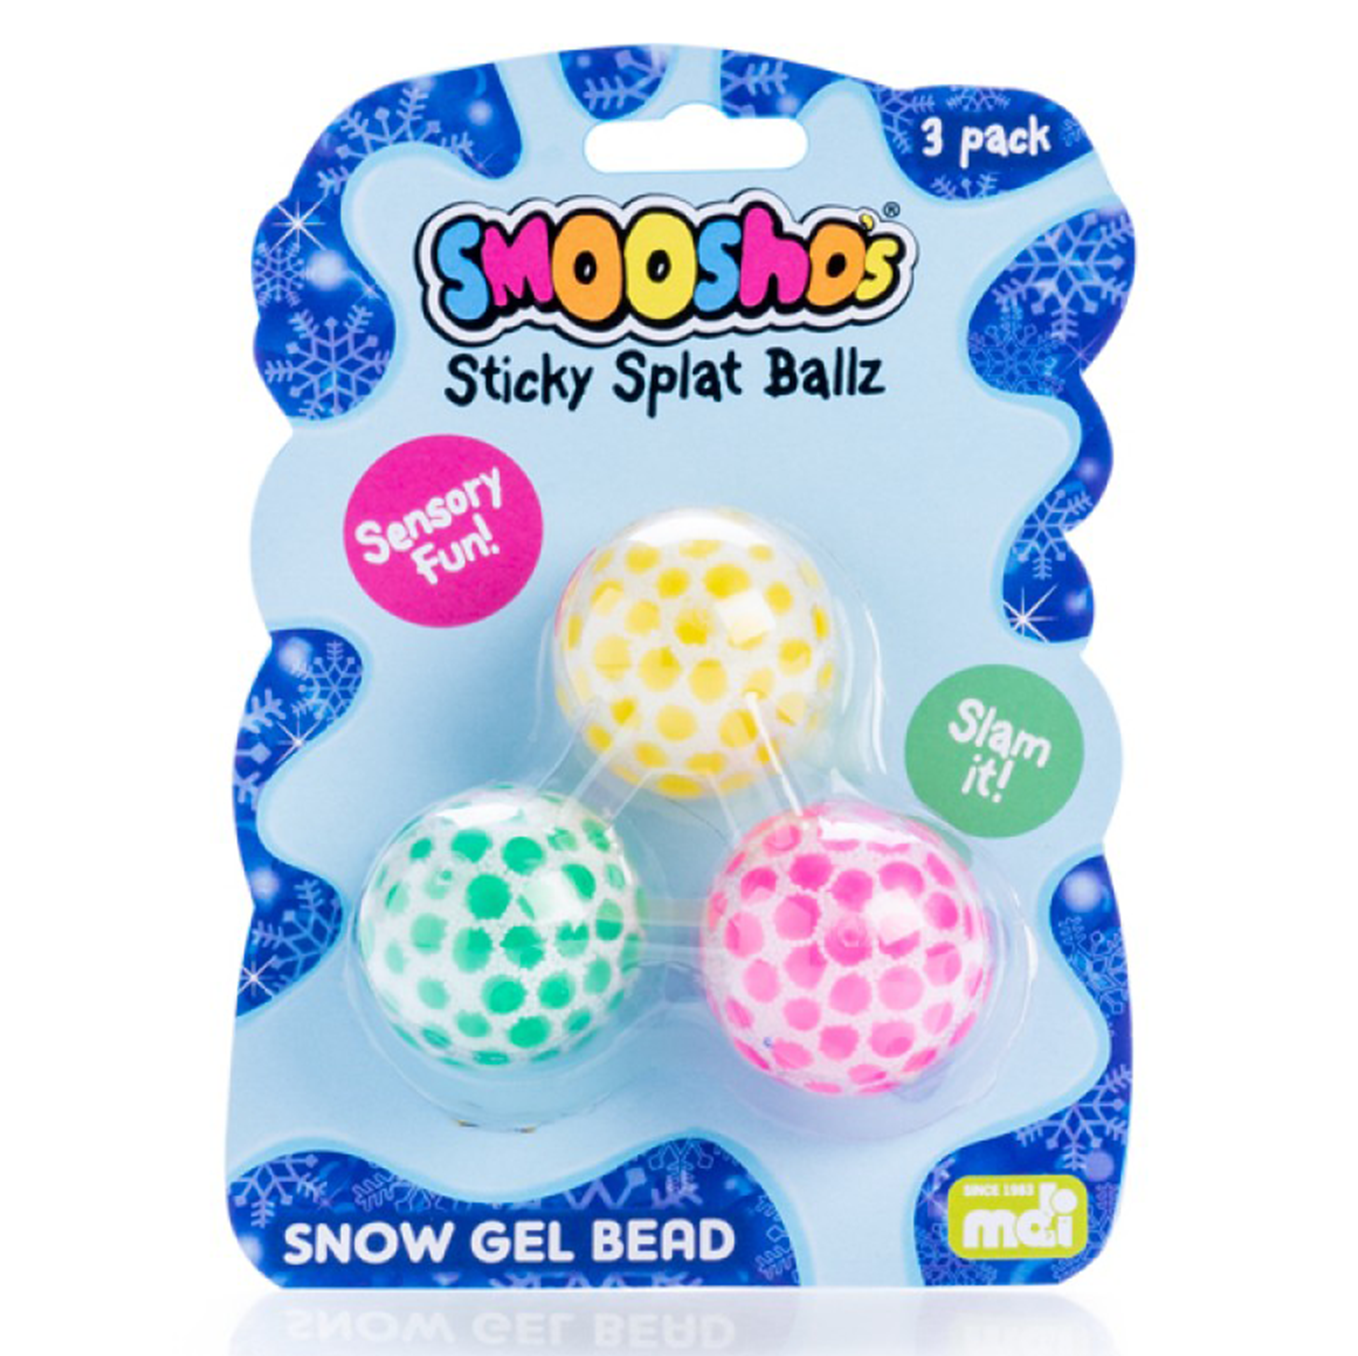 Snow Gel Bead Sticky Splat Ballz